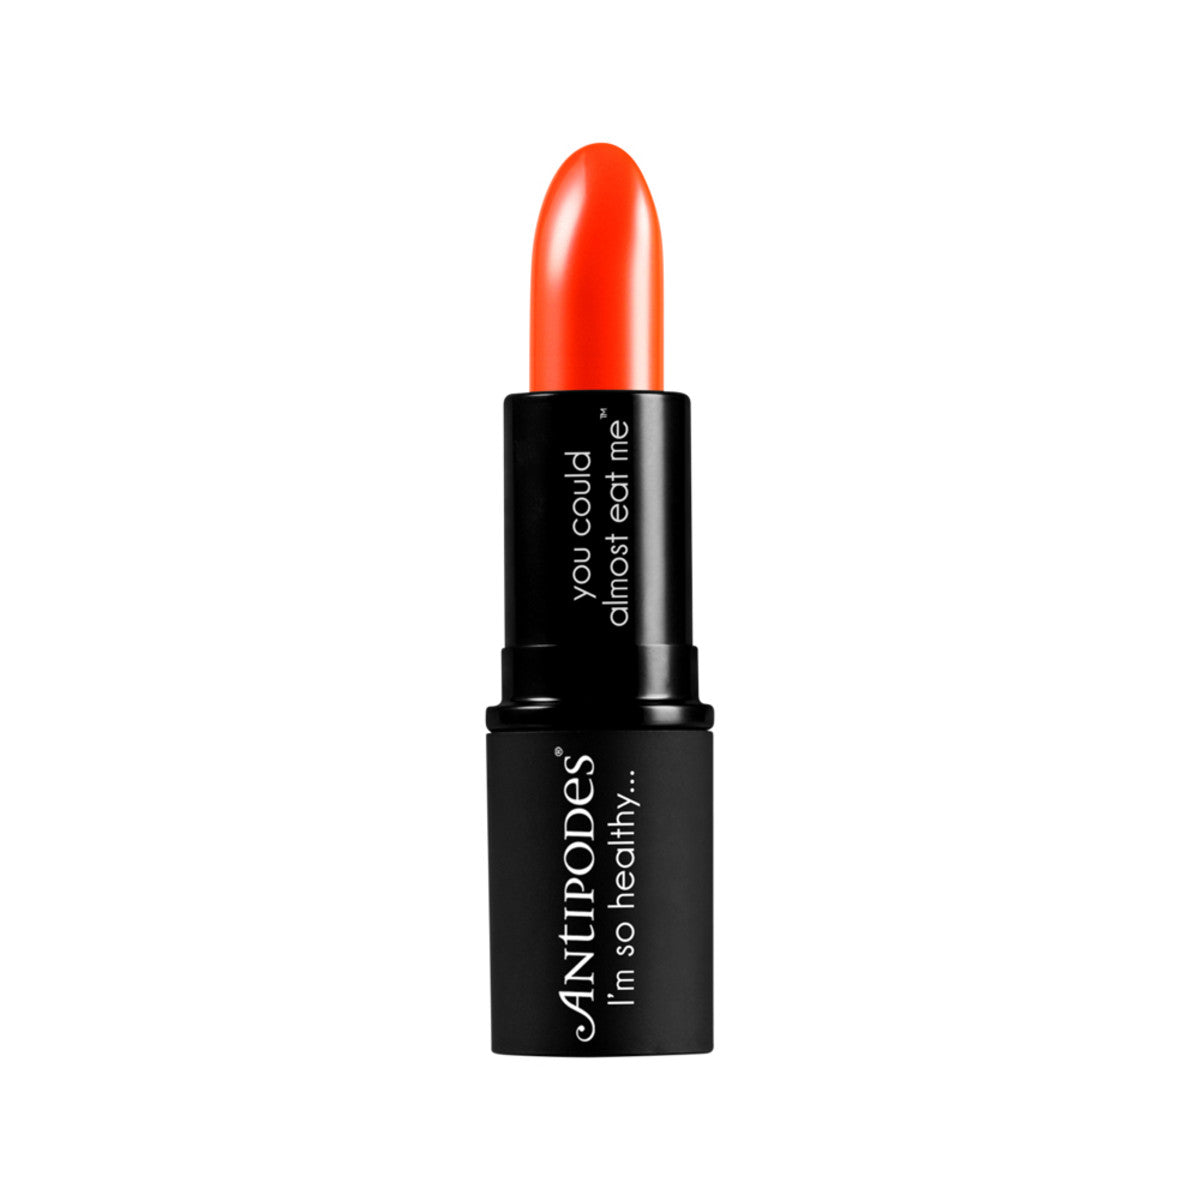 Antipodes Piha Beach Tangerine Moisture-Boost Natural Lipstick 4g-The Living Co.